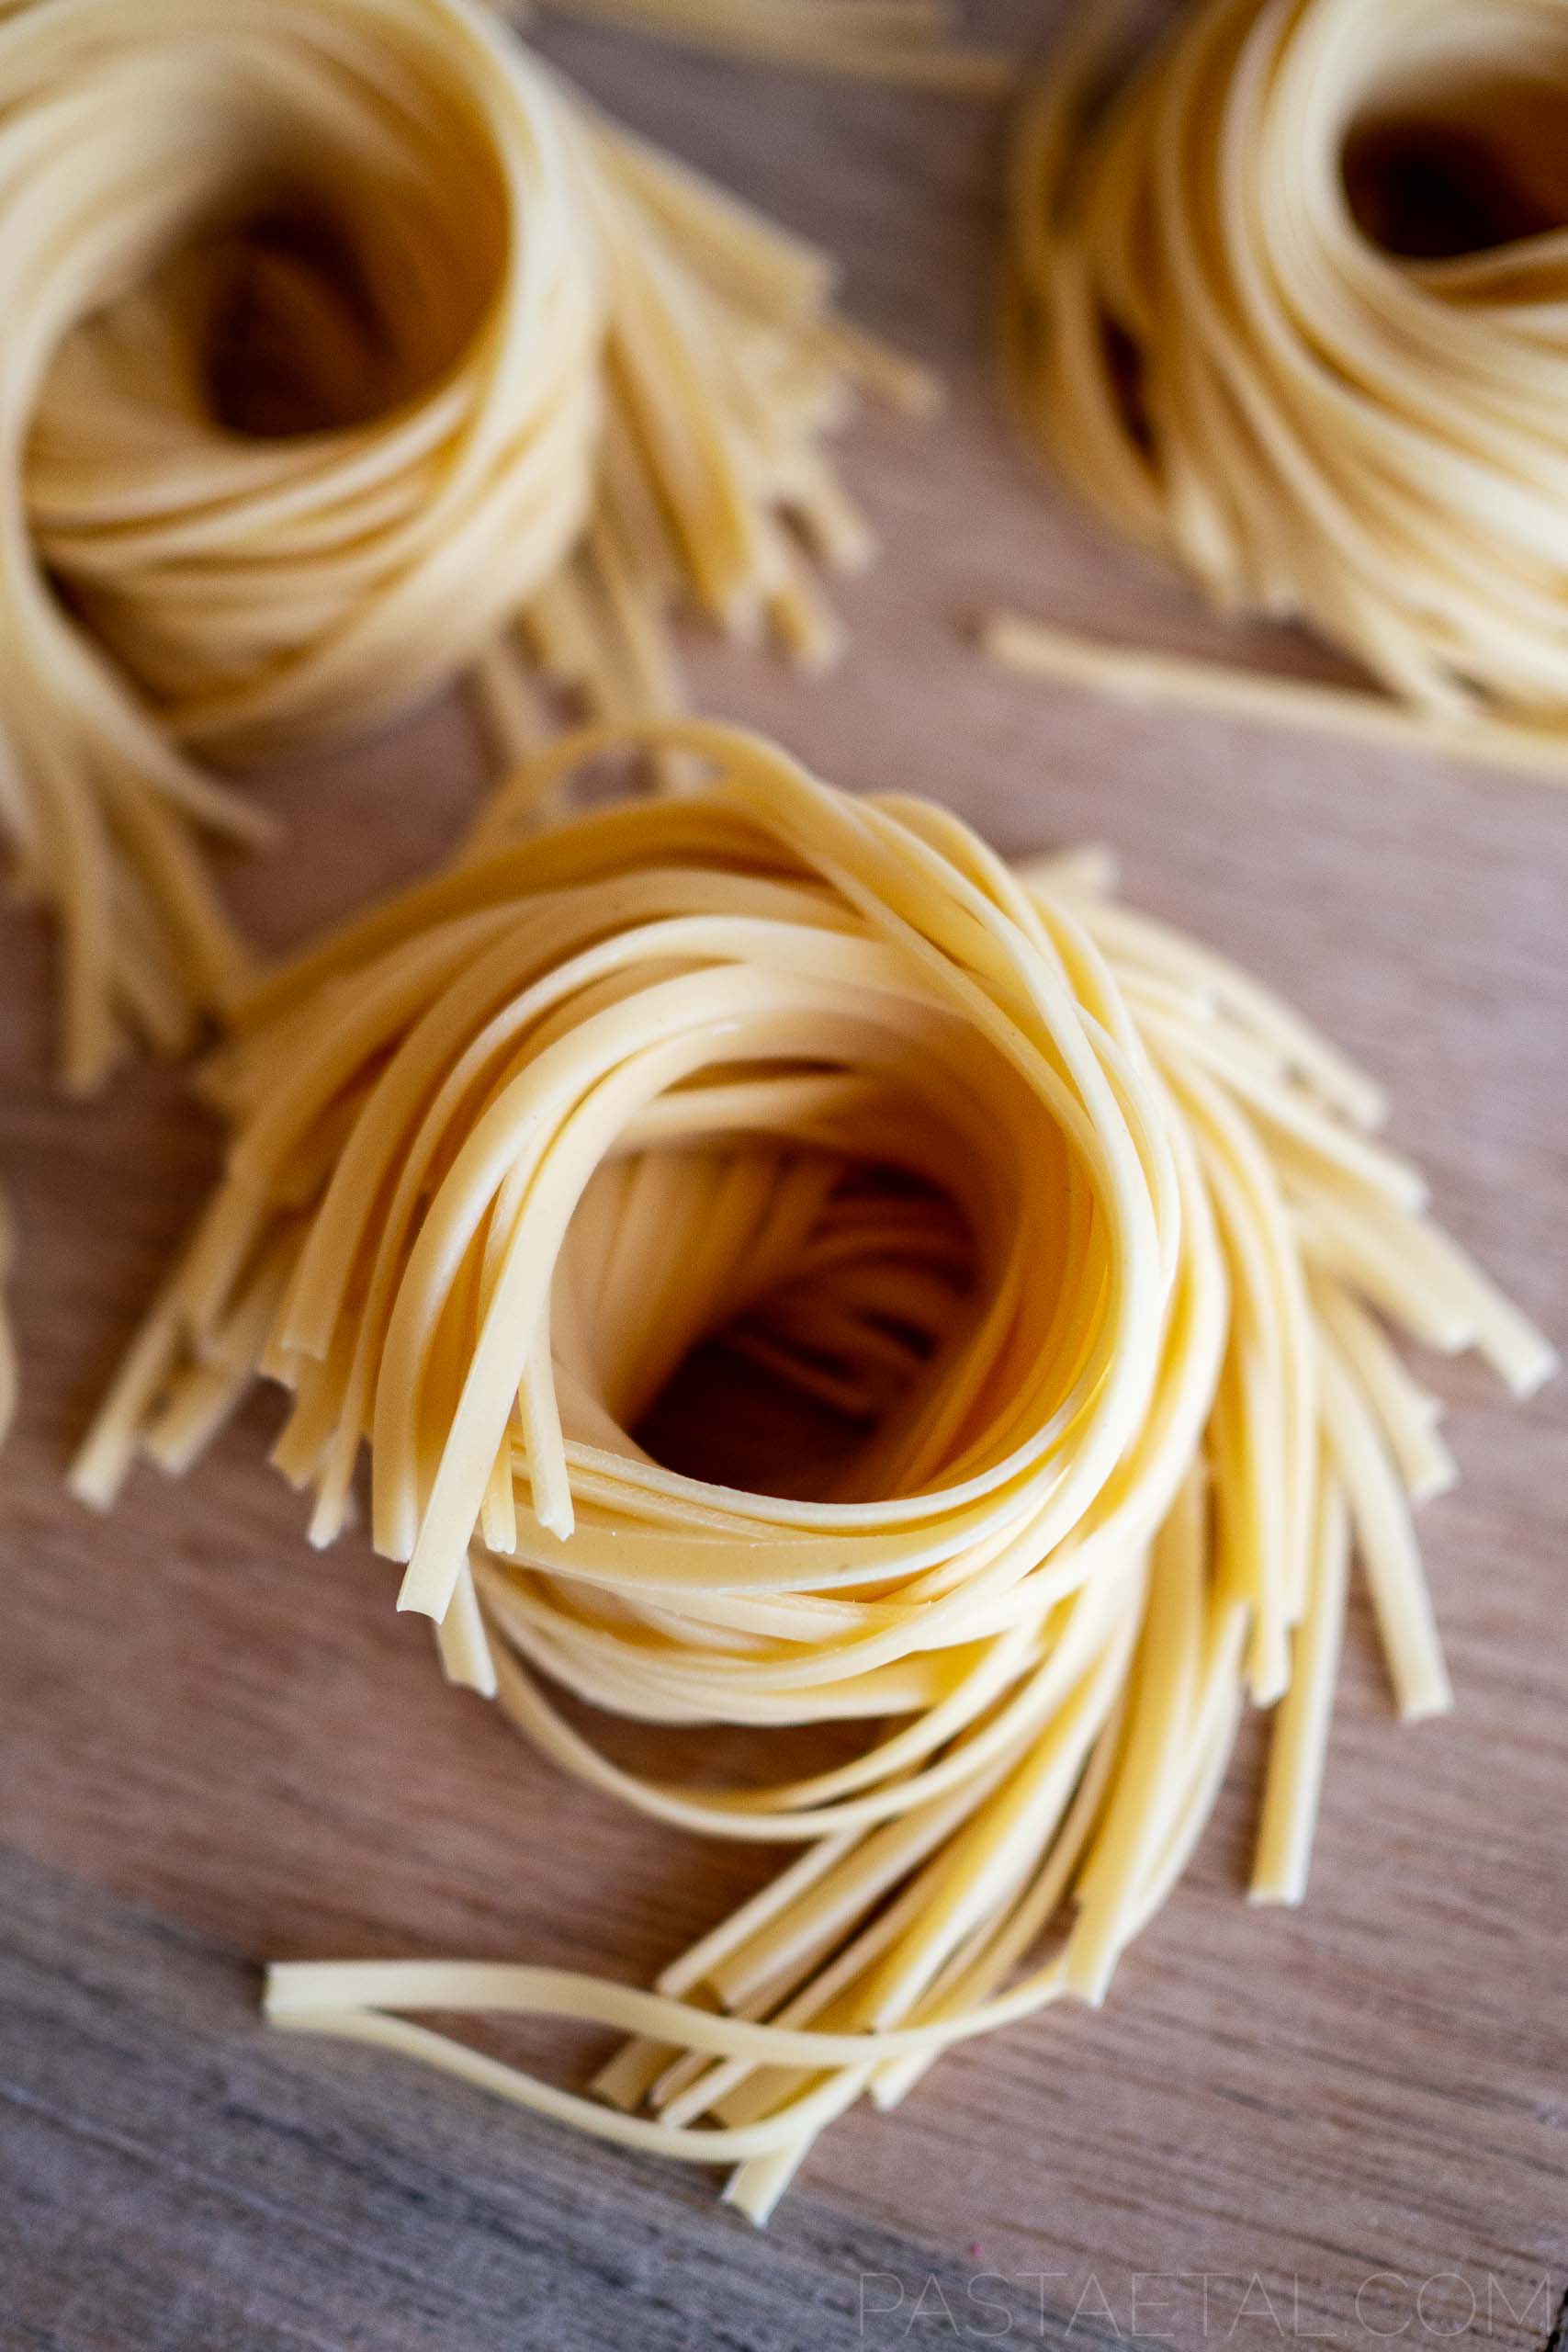 https://pastaetal.com/wp-content/uploads/2021/04/close-up-of-a-nest-of-spaghetti-alla-chitarra.jpg